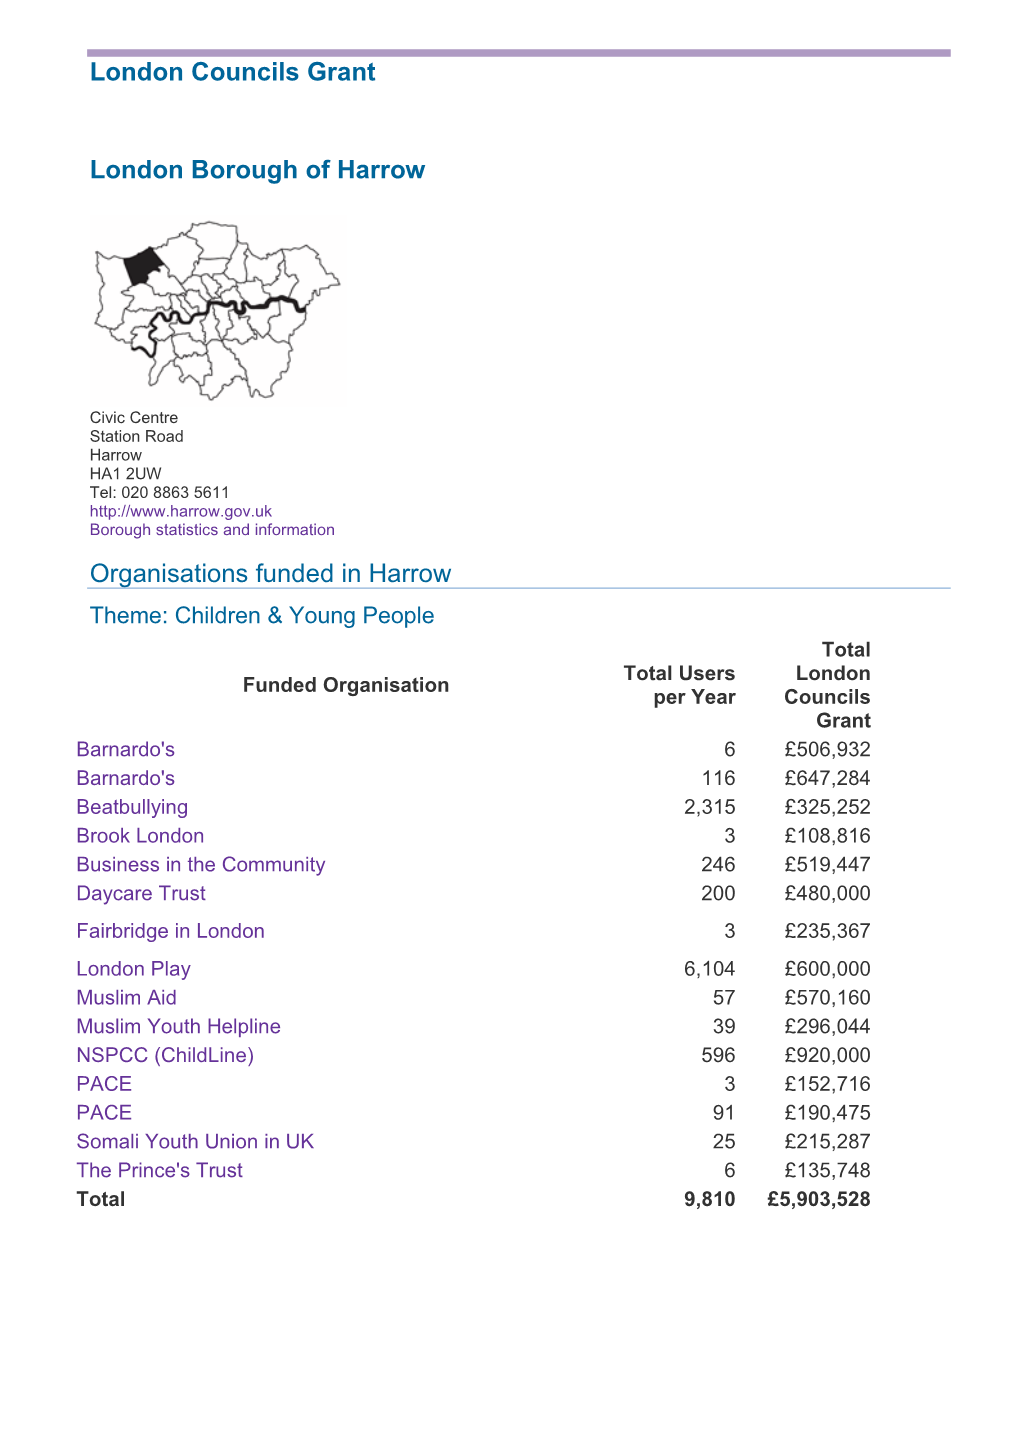 London Councils Grant London Borough of Harrow Organisations